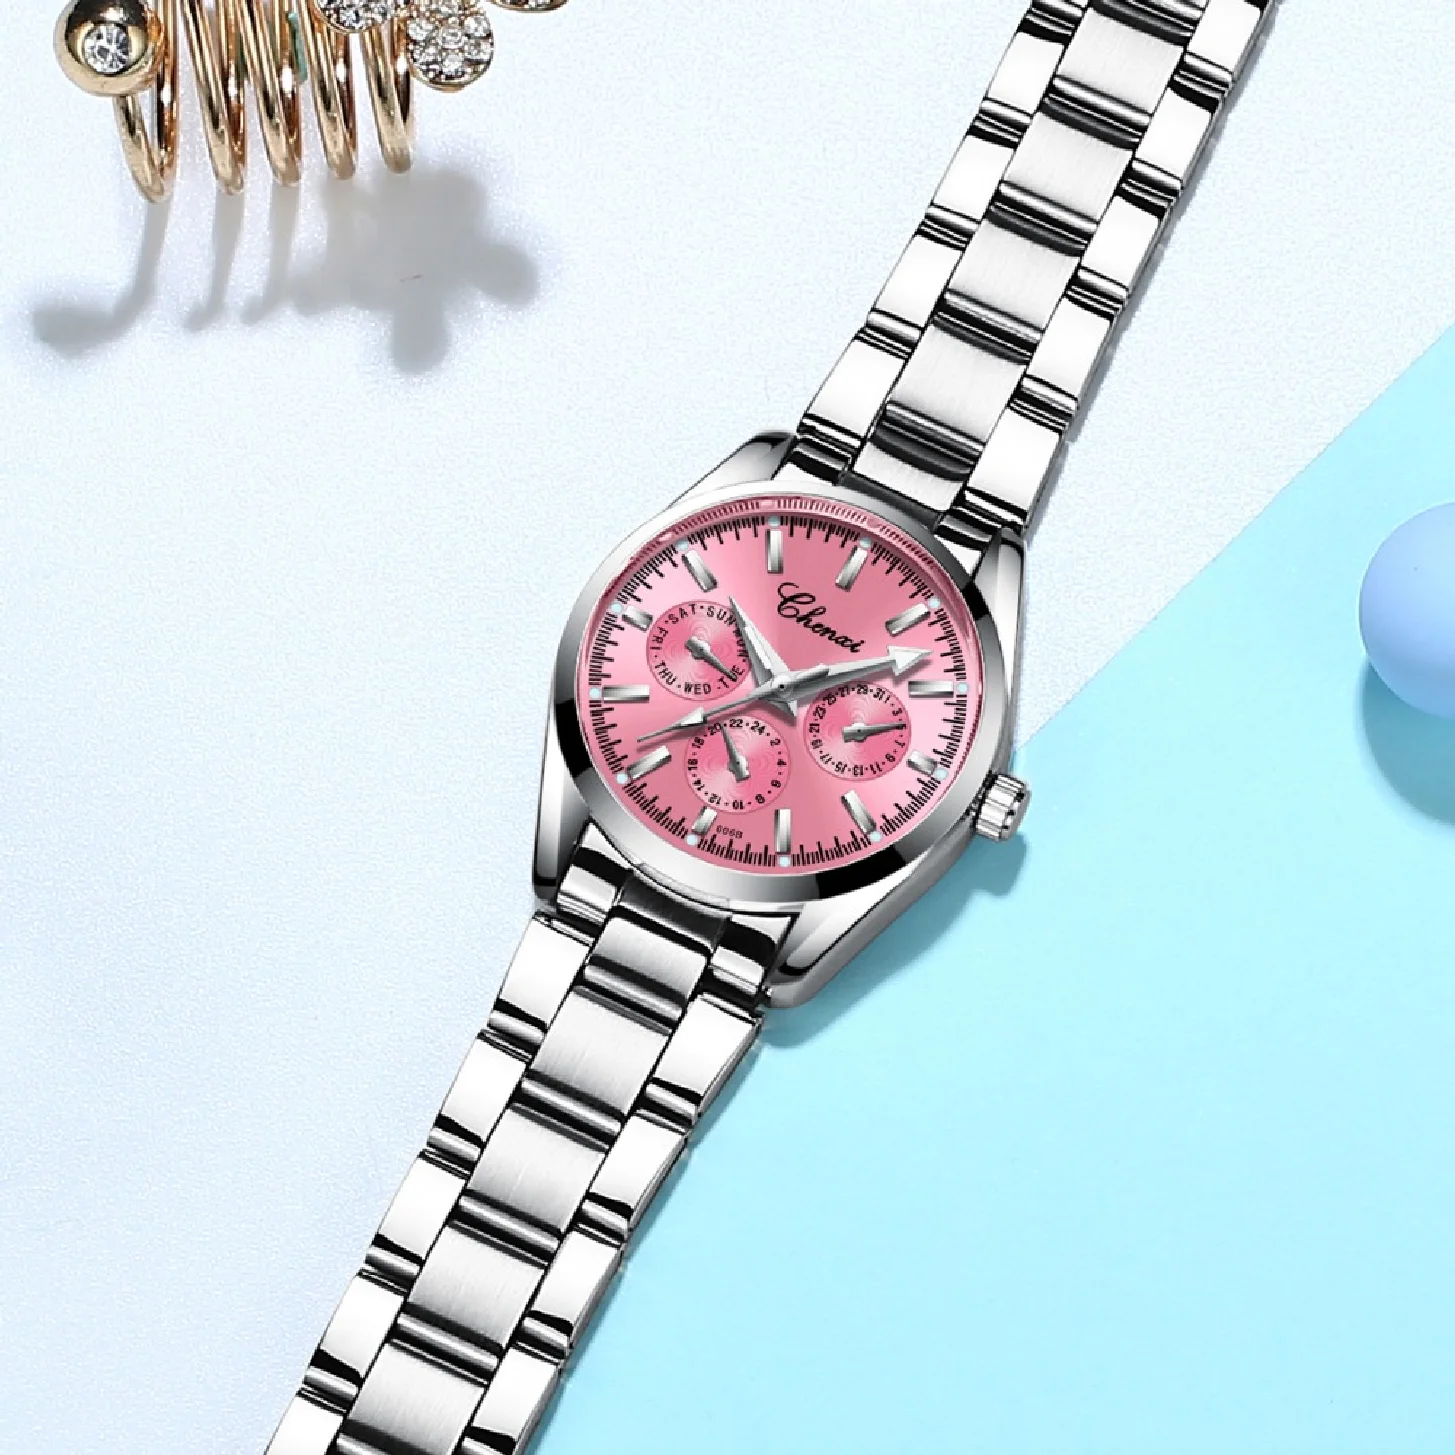 CHENXI Women Dress Top Luxury Brand Watch Stainless Steel Women's Analog Quartz Wrist Watch Fashion Woman Waterproof Clock enlarge